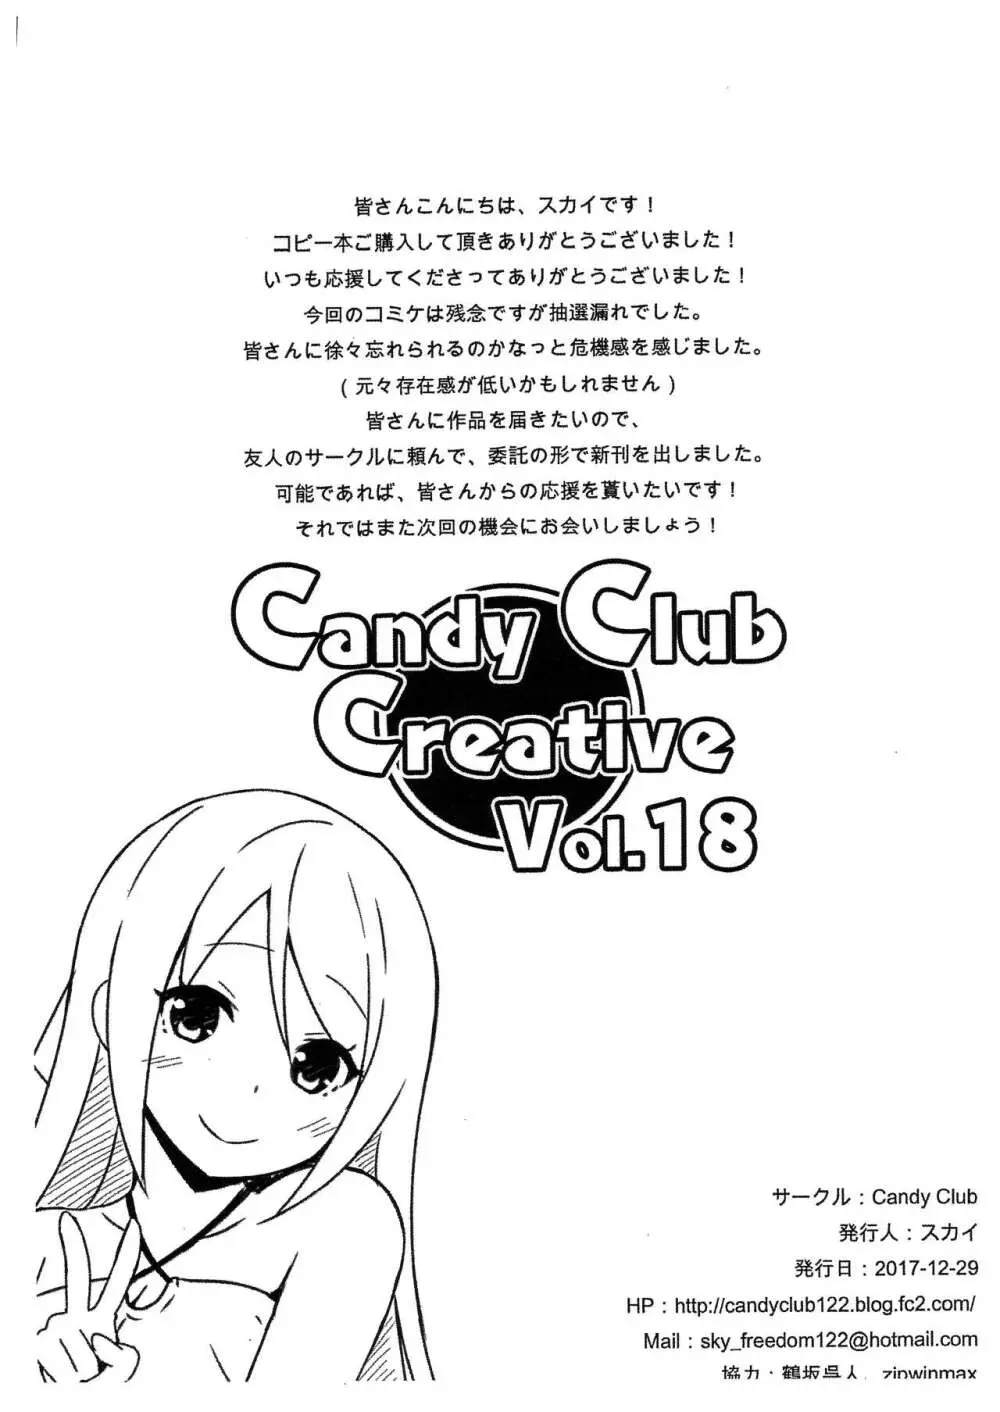 Candy Club Creative Vol.18 8ページ